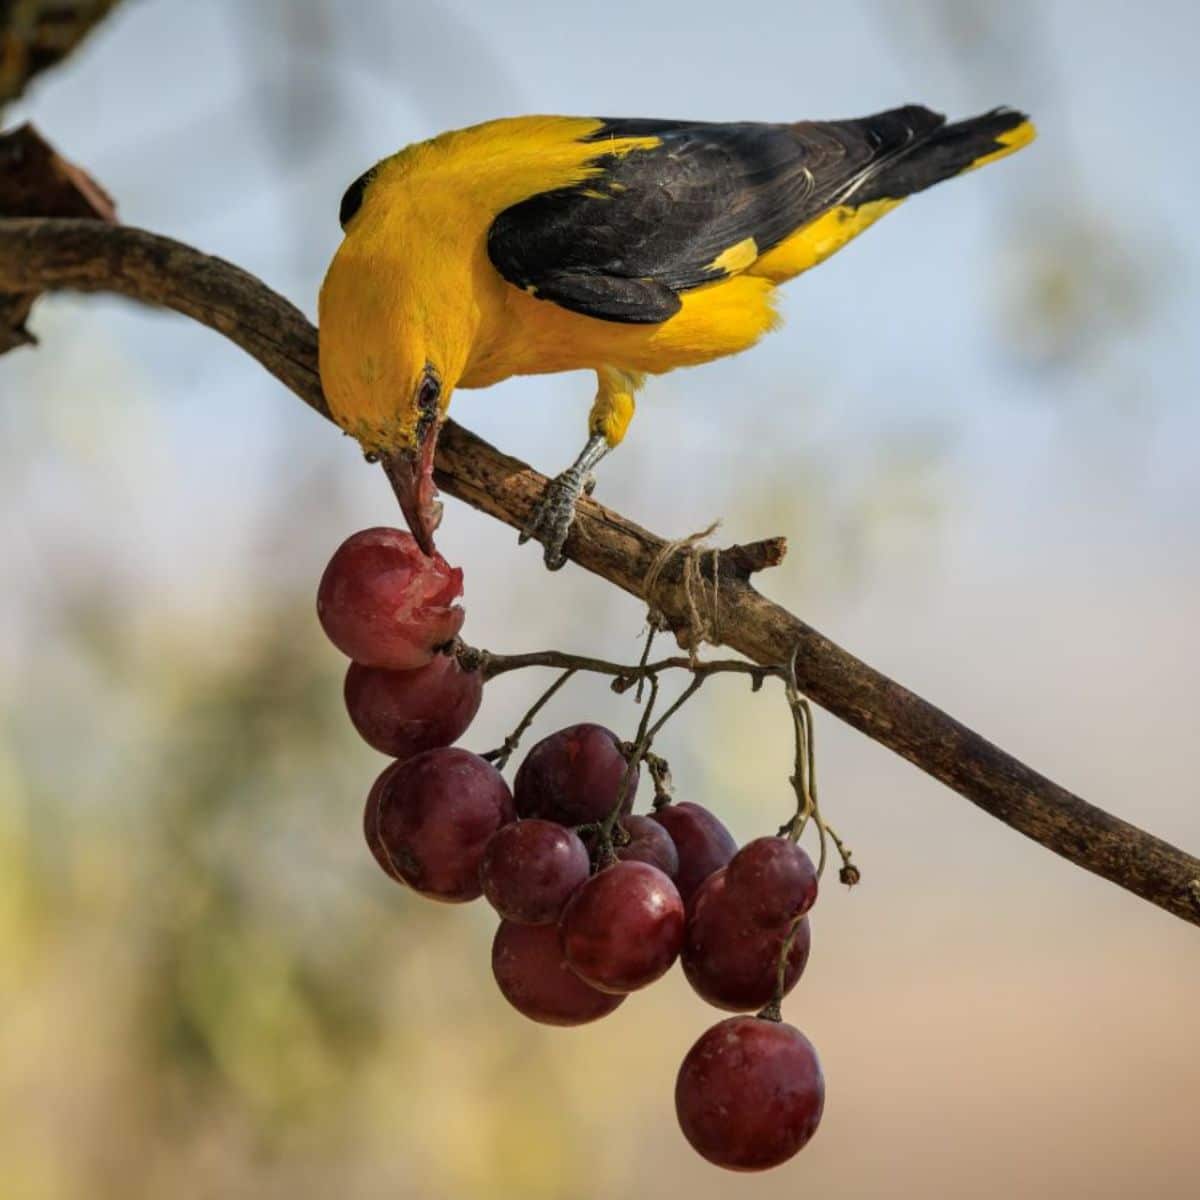 A beautiful black-yellow bird eating ripe grapes.